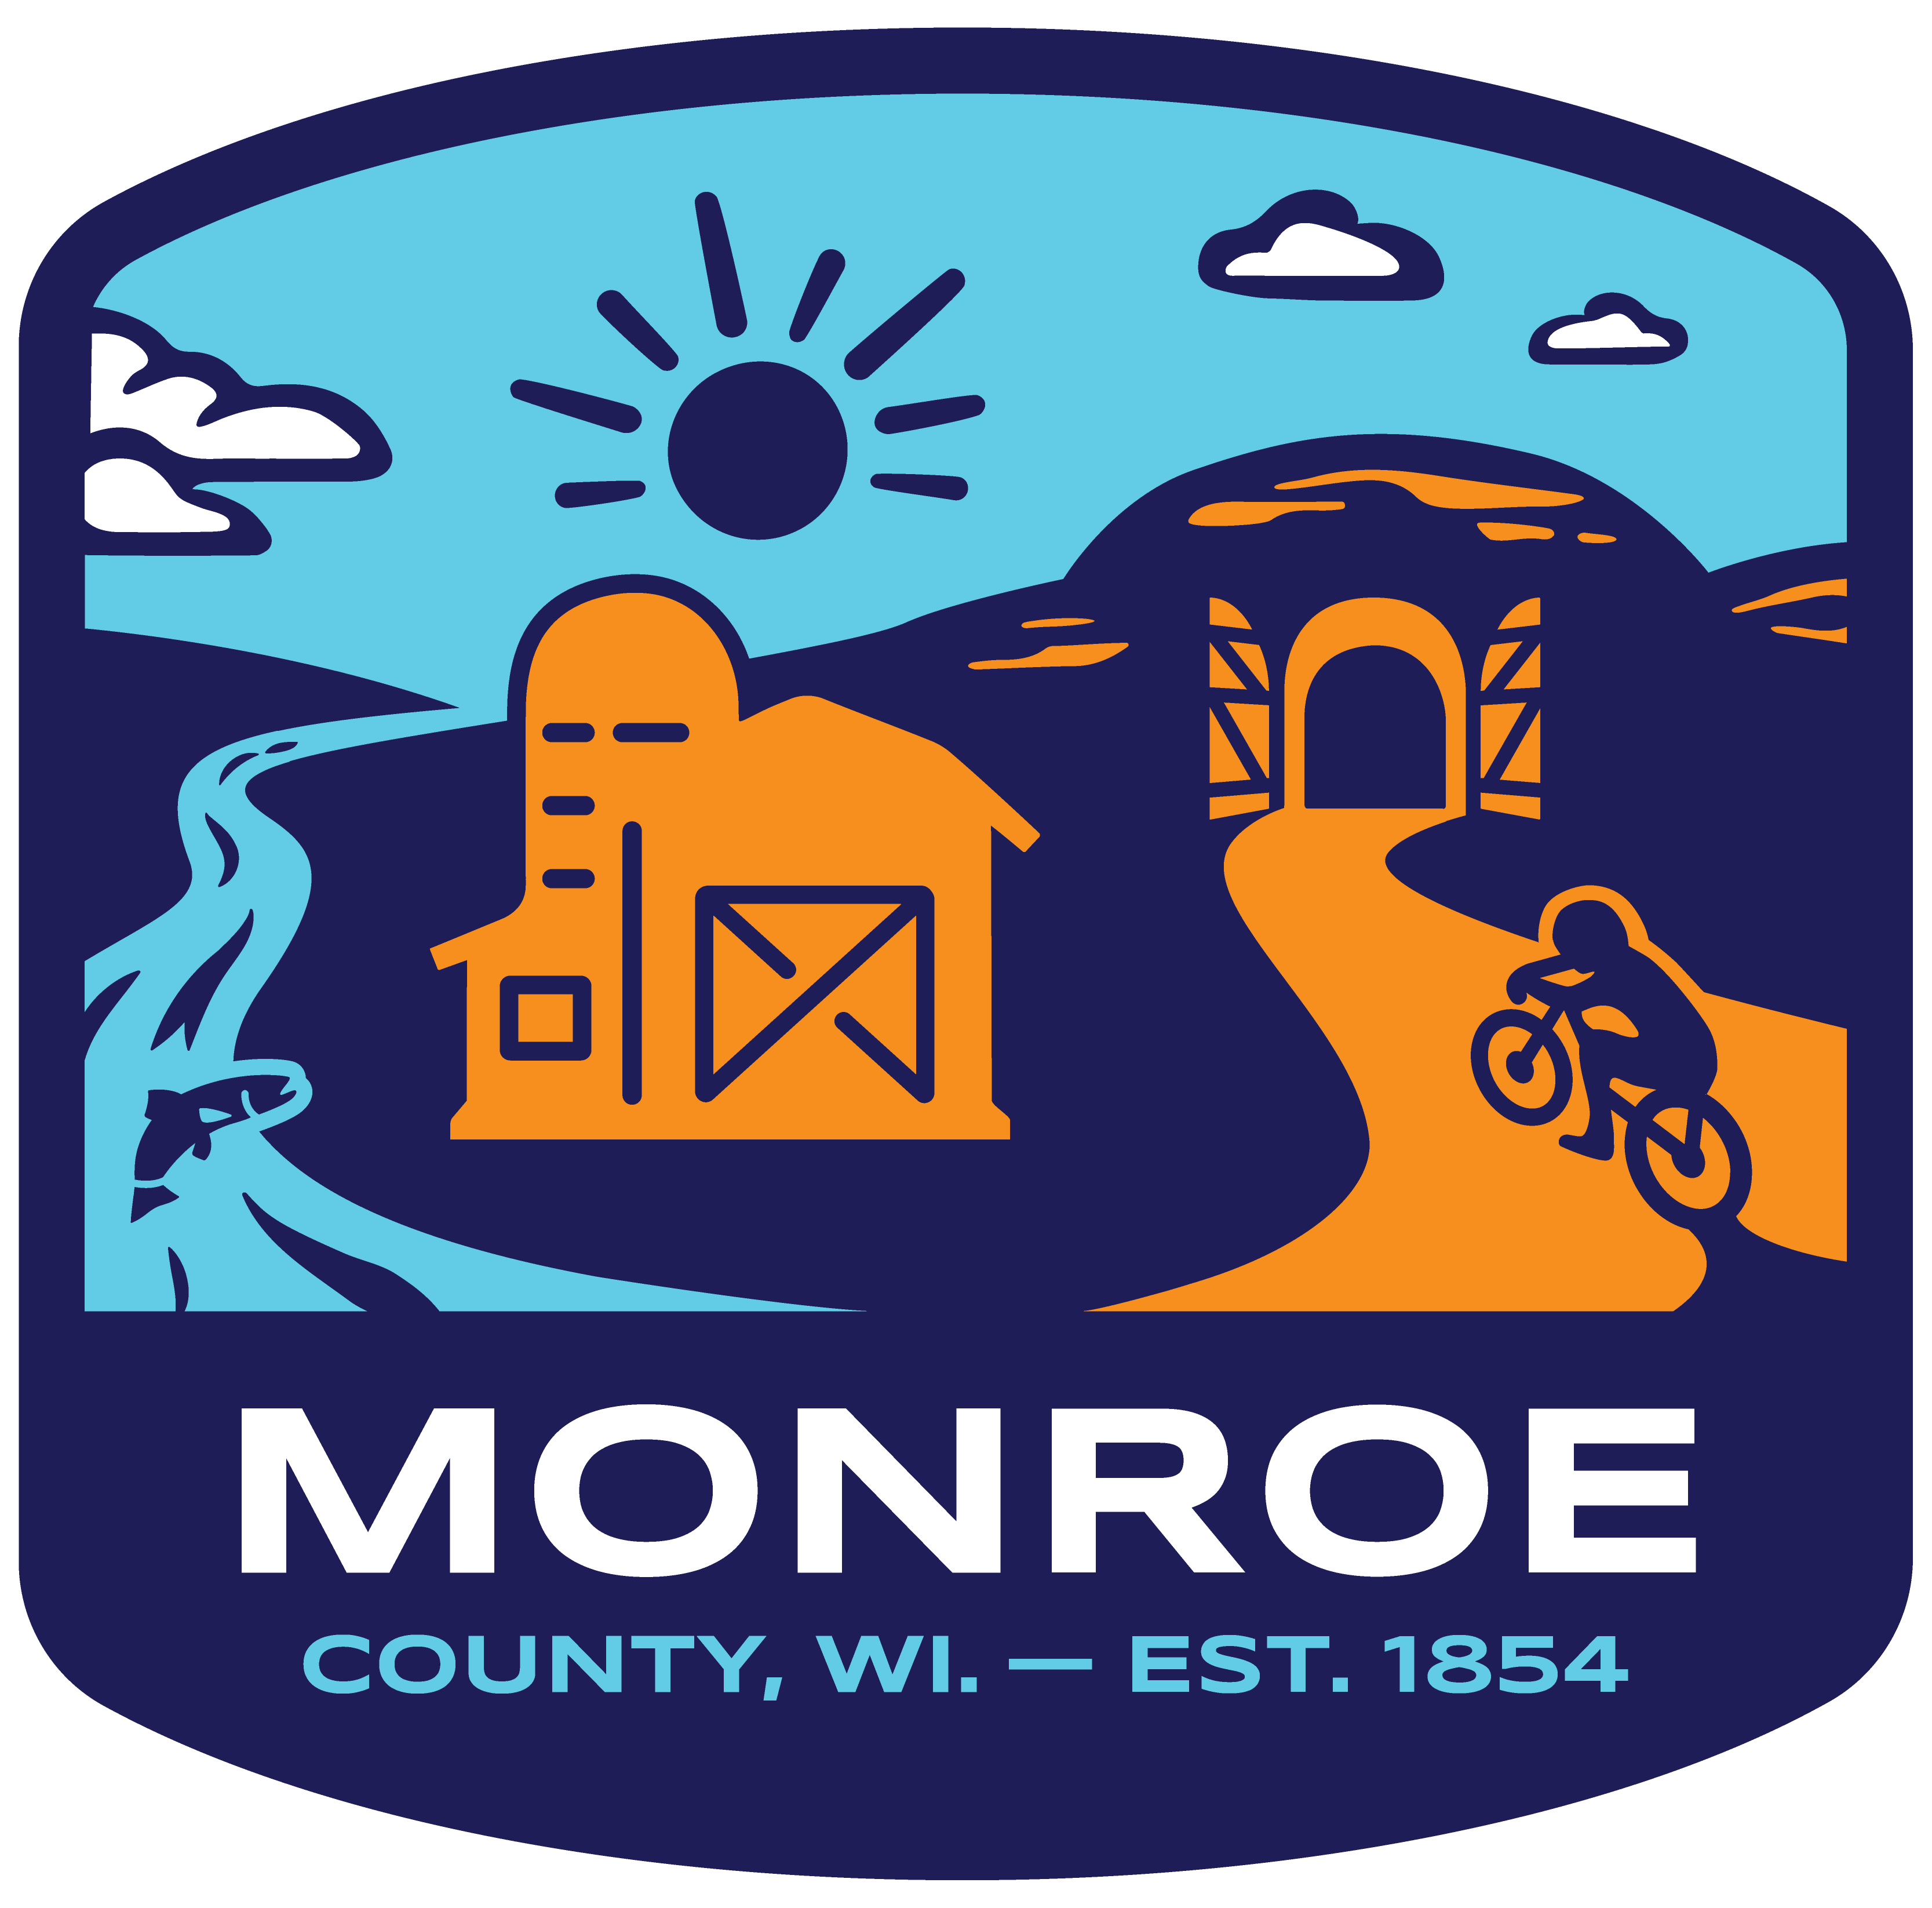 Explore Monroe County, Wisconsin